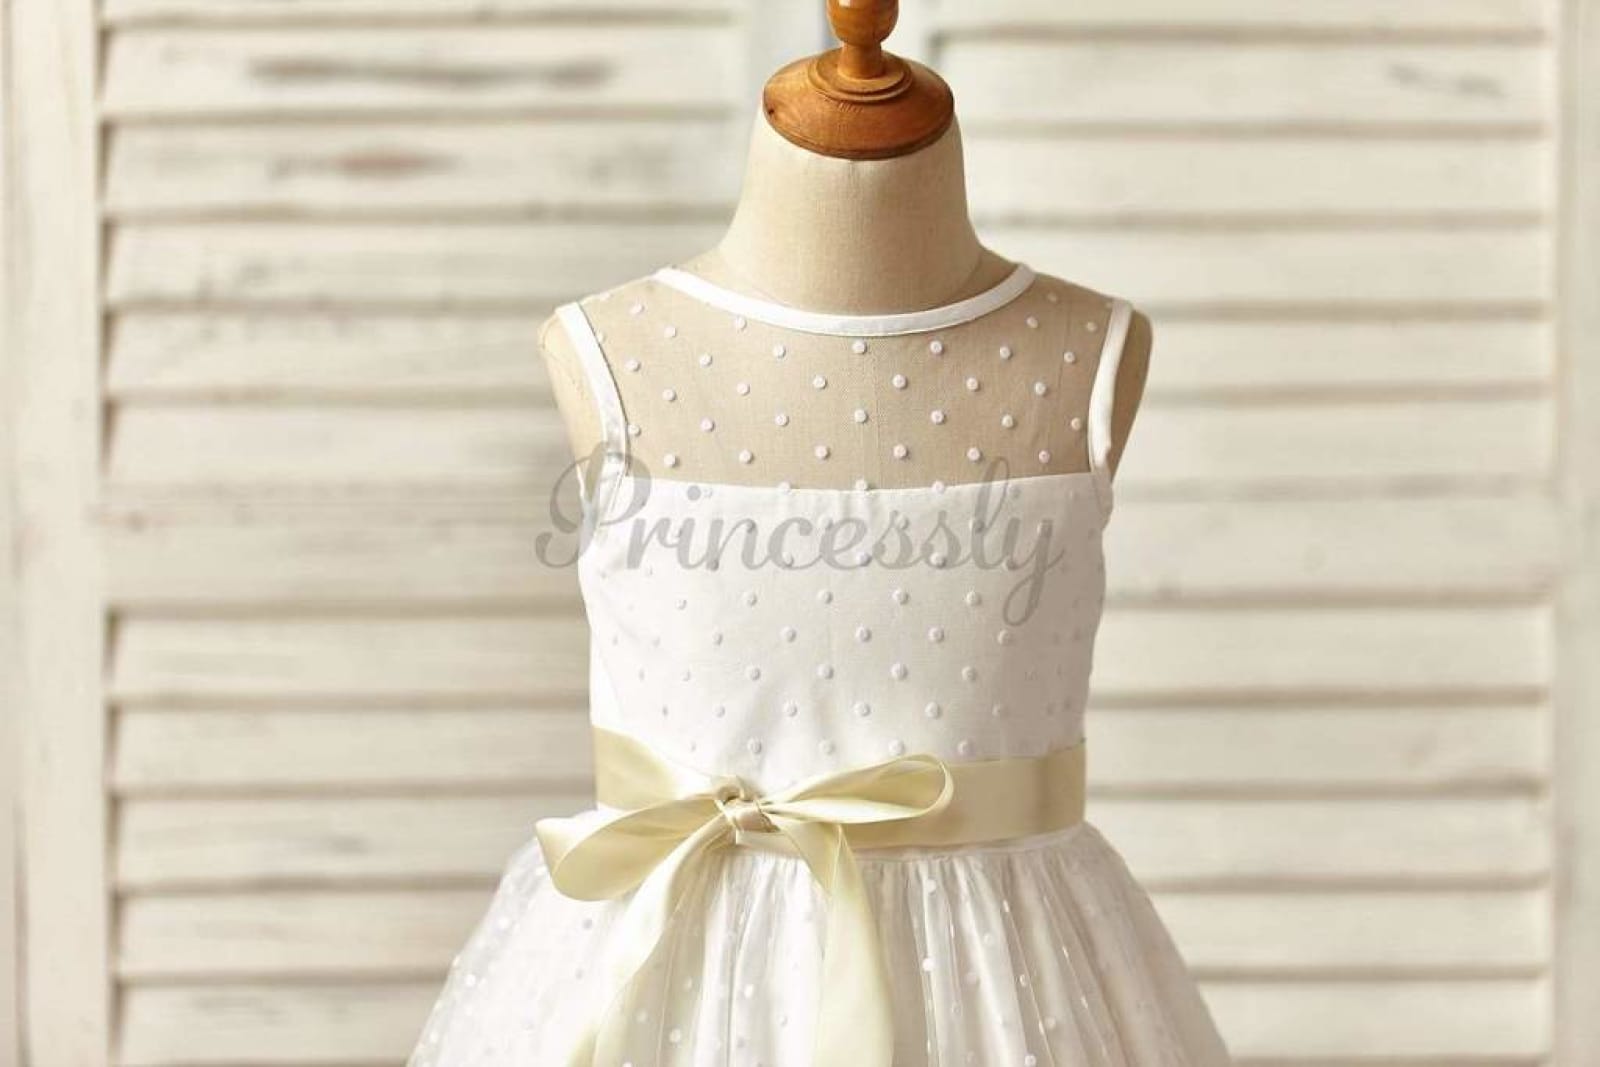 $69 SALE: Sheer Neck Polka Dot Tulle Flower Girl Dress with Champagne Sash